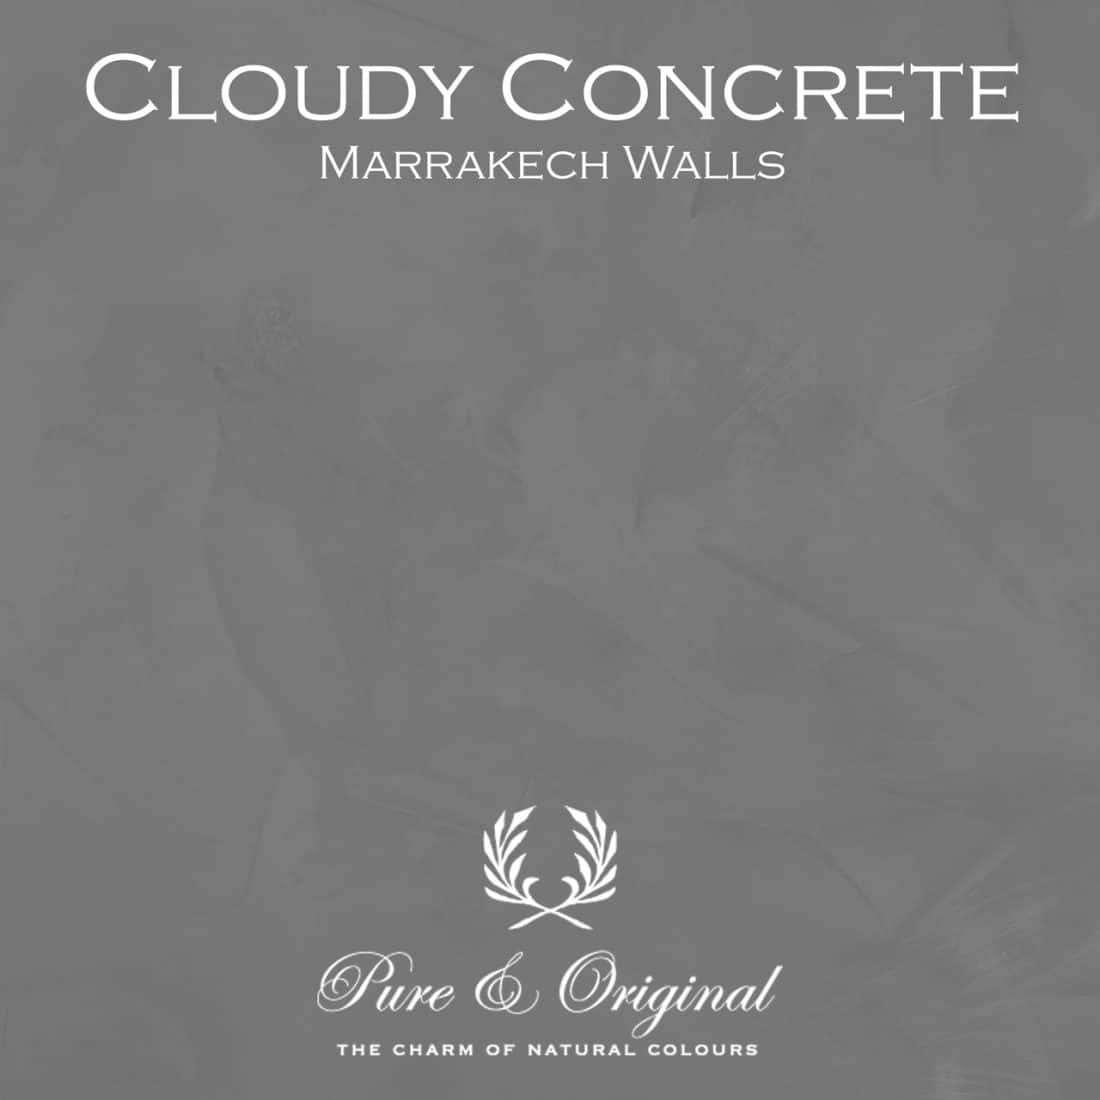 Cloudy Concrete Marrakech Walls Pure Original